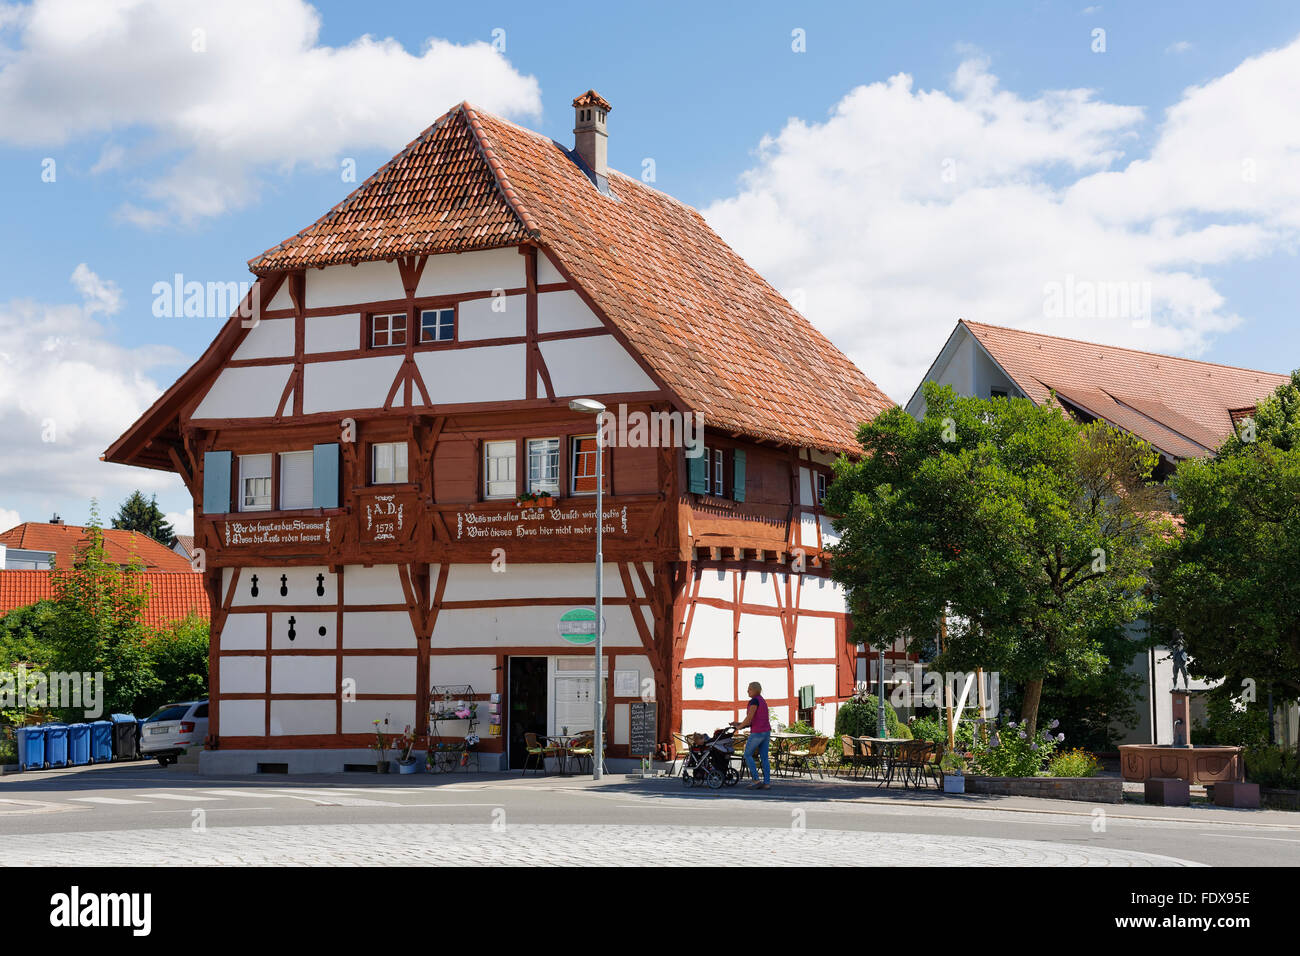 Maison à colombages construite en 1578, Immenstaad am Bodensee, Bodenseekreis, en Haute Souabe, Bade-Wurtemberg, Allemagne Banque D'Images